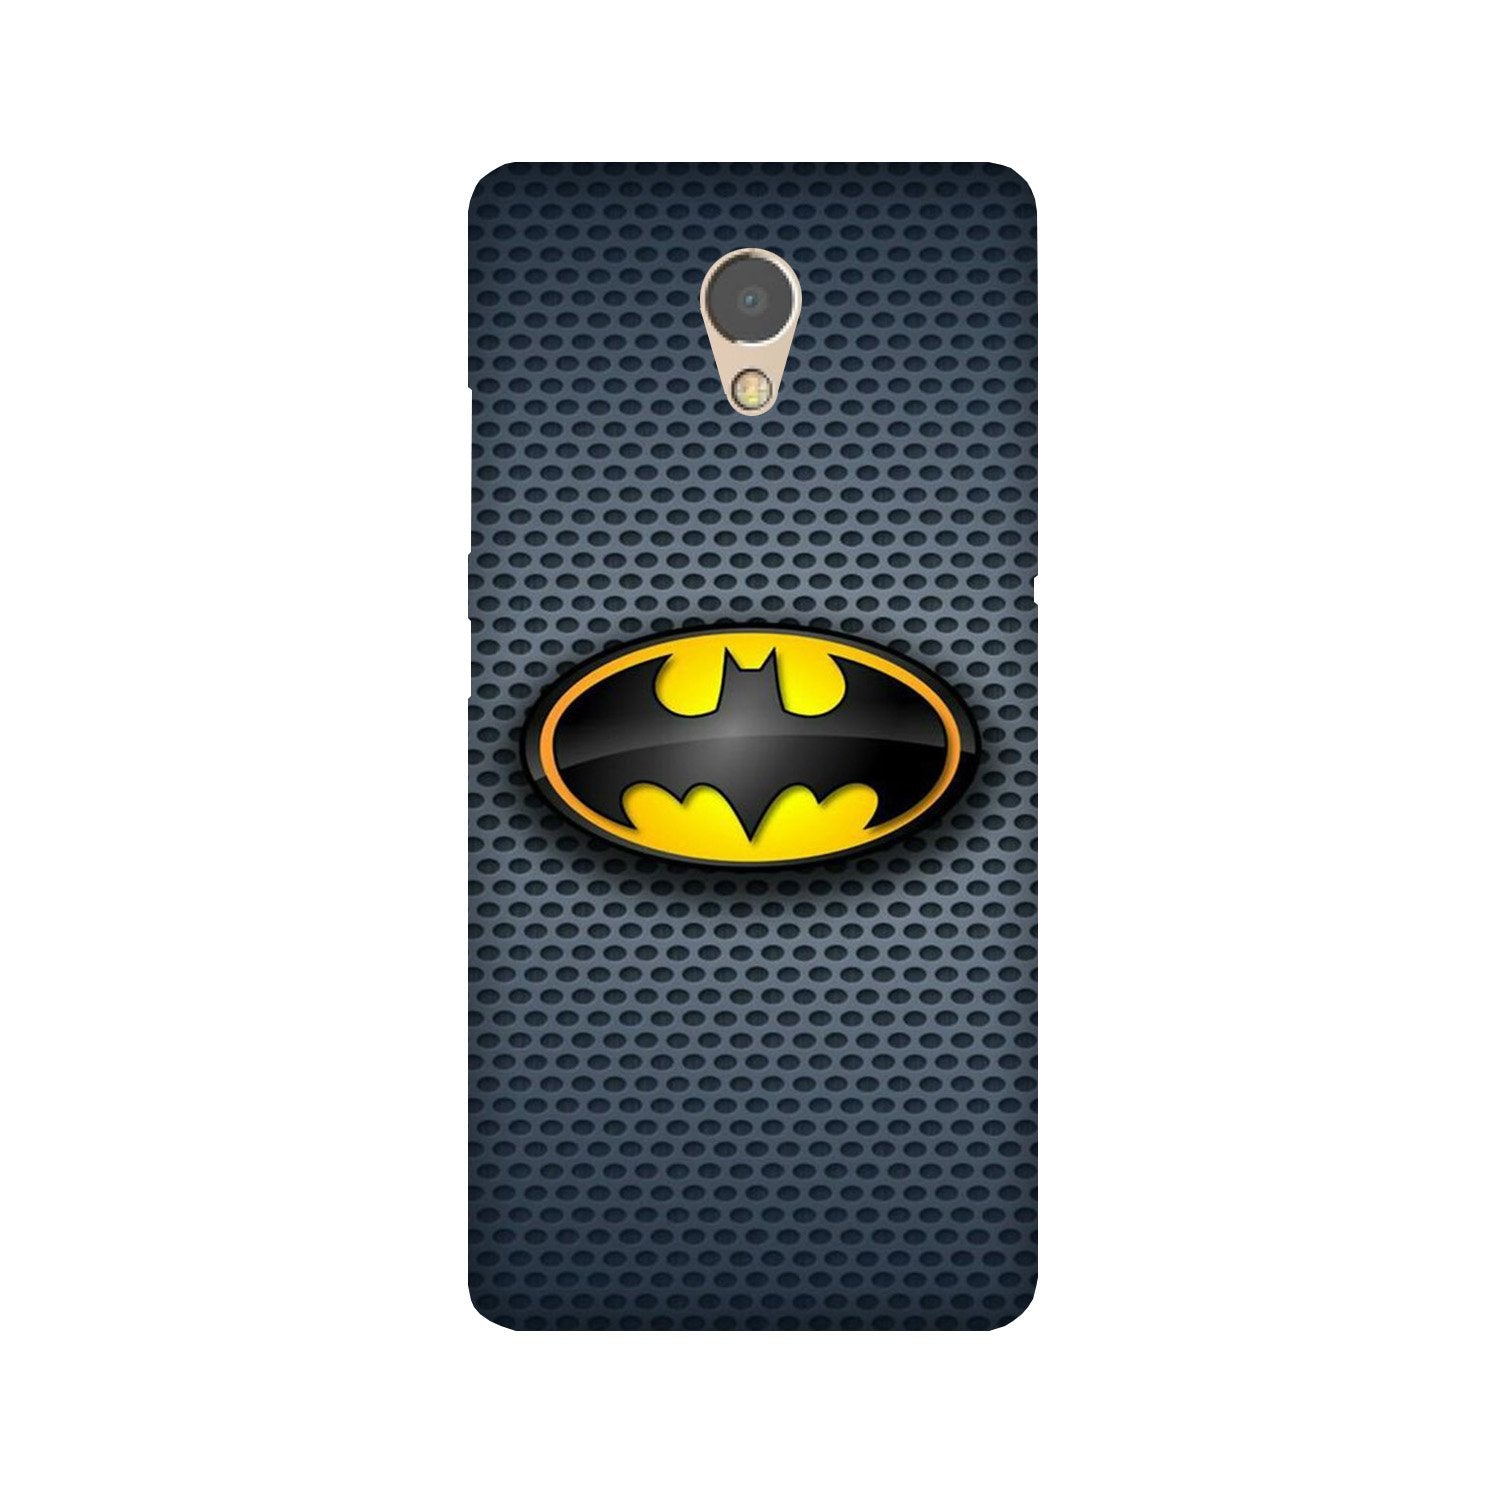 Batman Case for Lenovo P2 (Design No. 244)